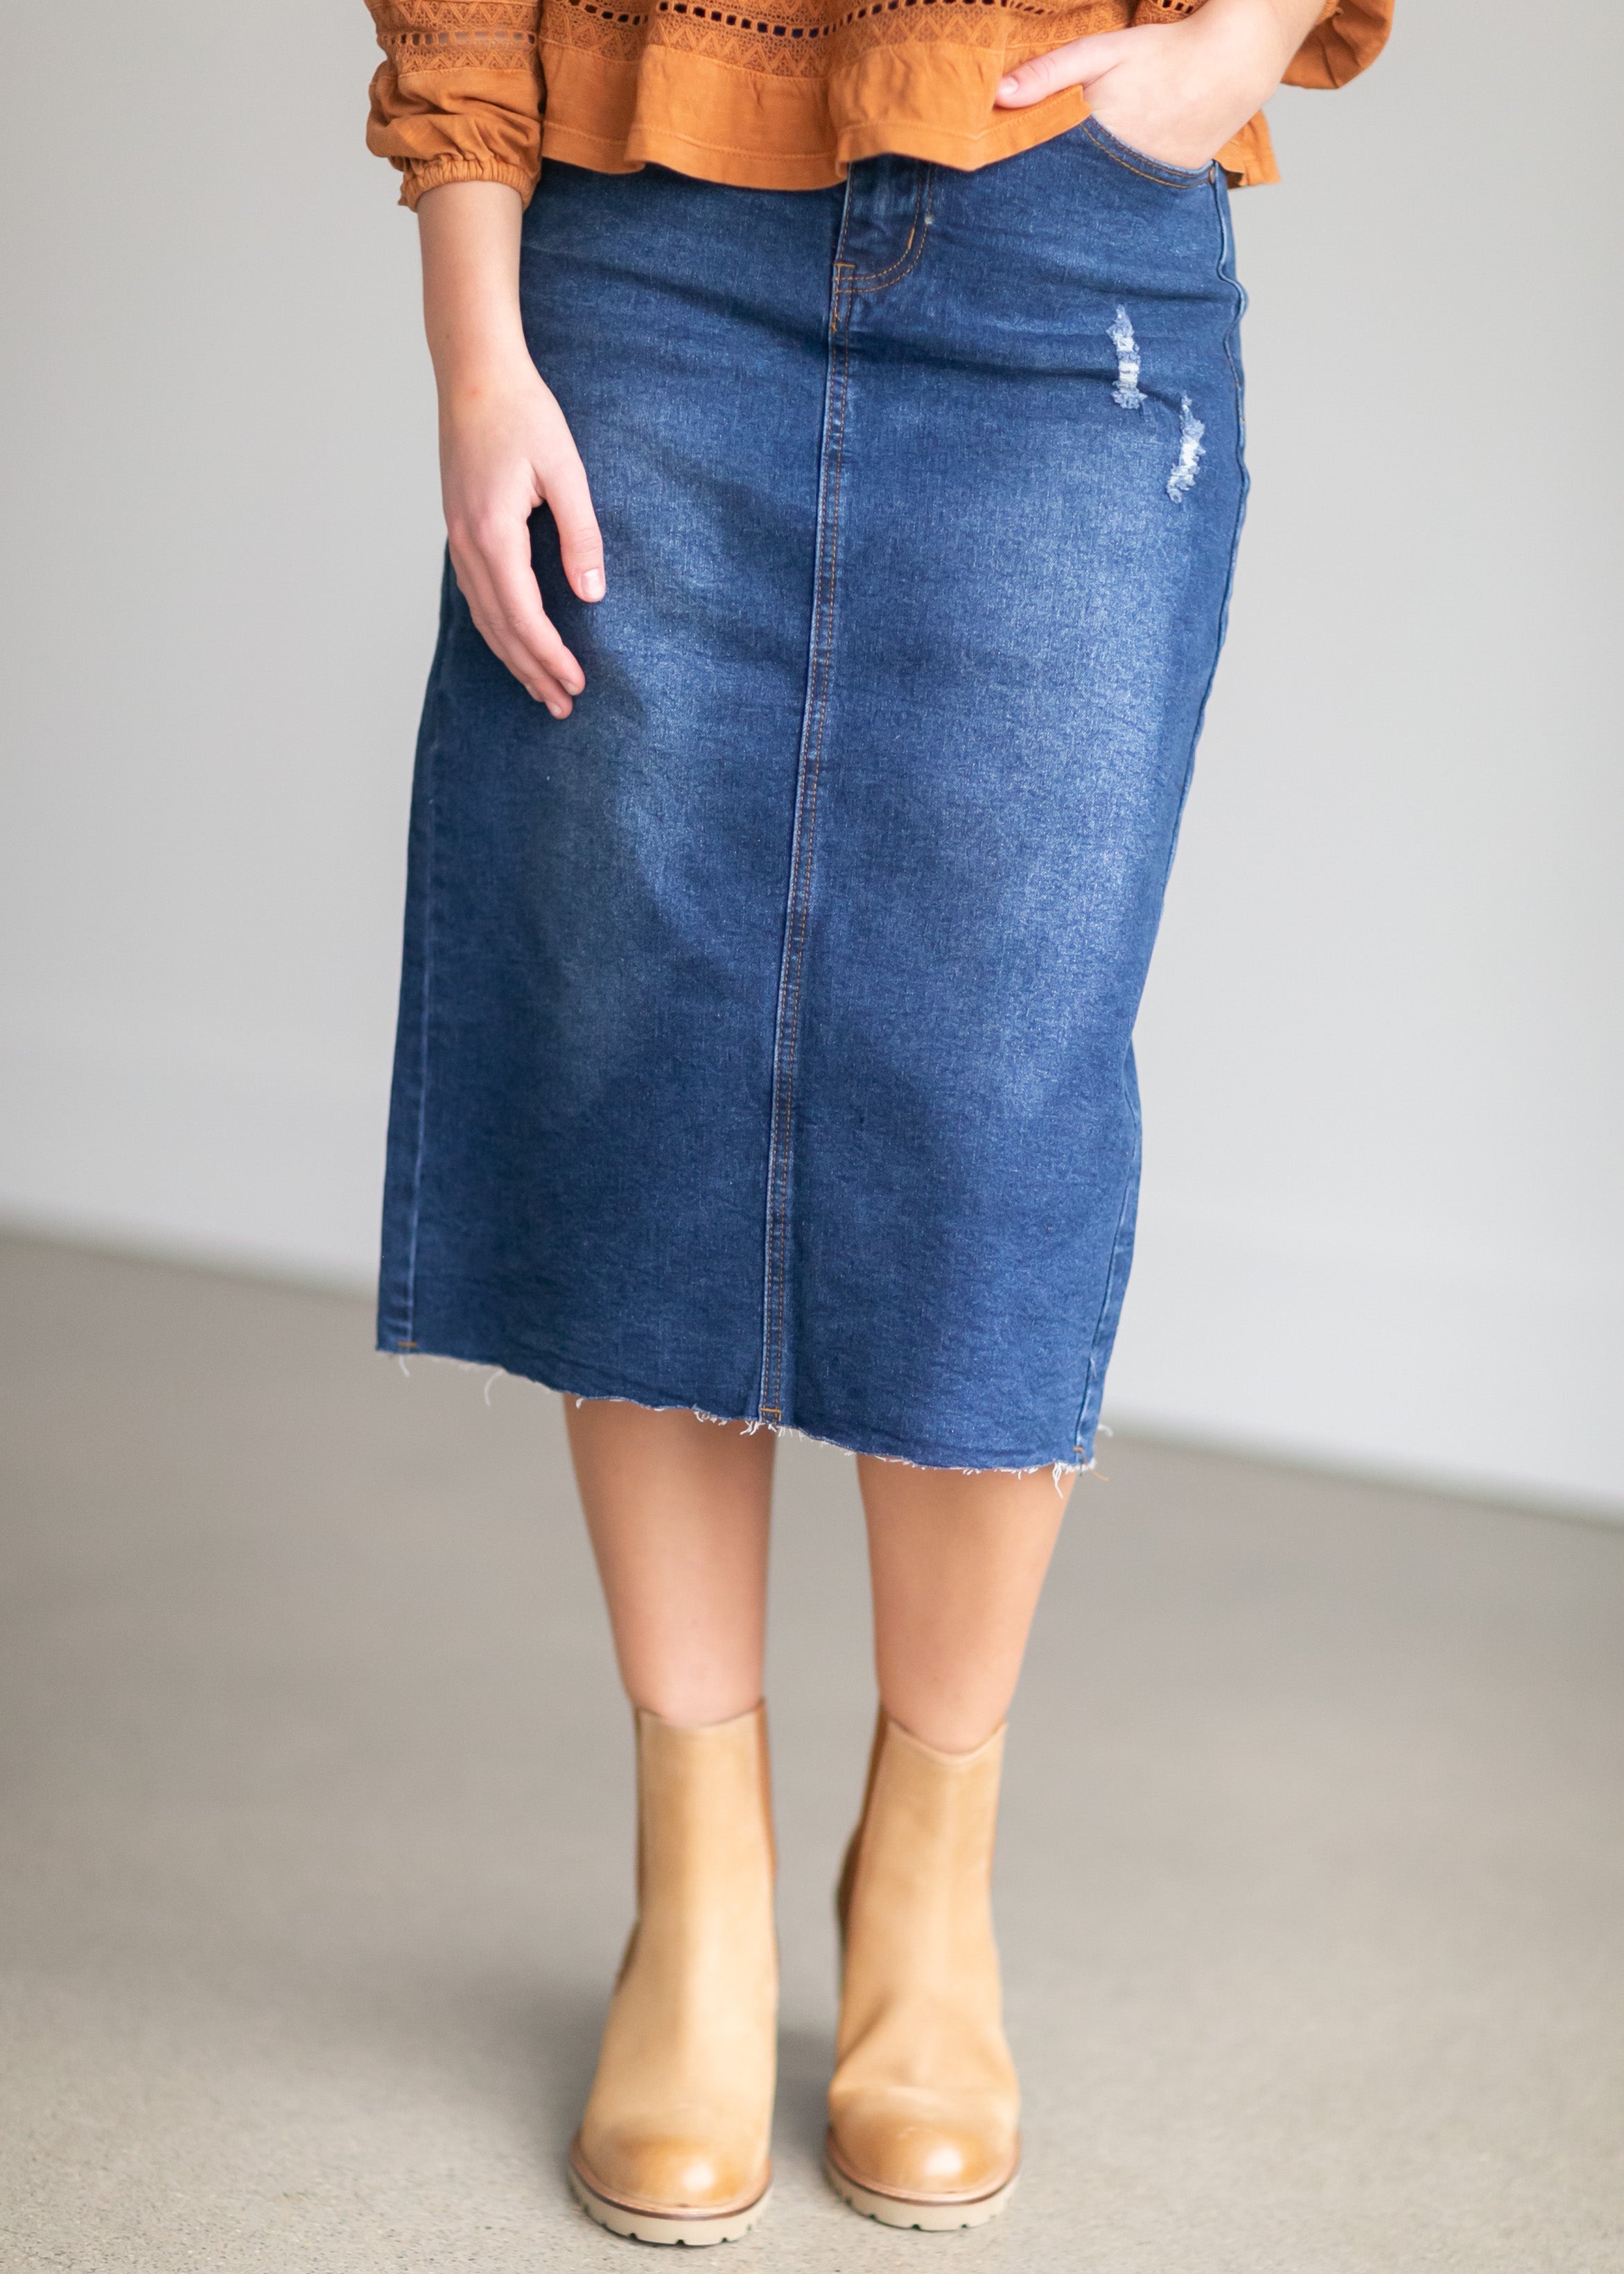 C Established 1946 Denim Skirt Straight Knee Length Womens 12 Blue  Colorblock | eBay